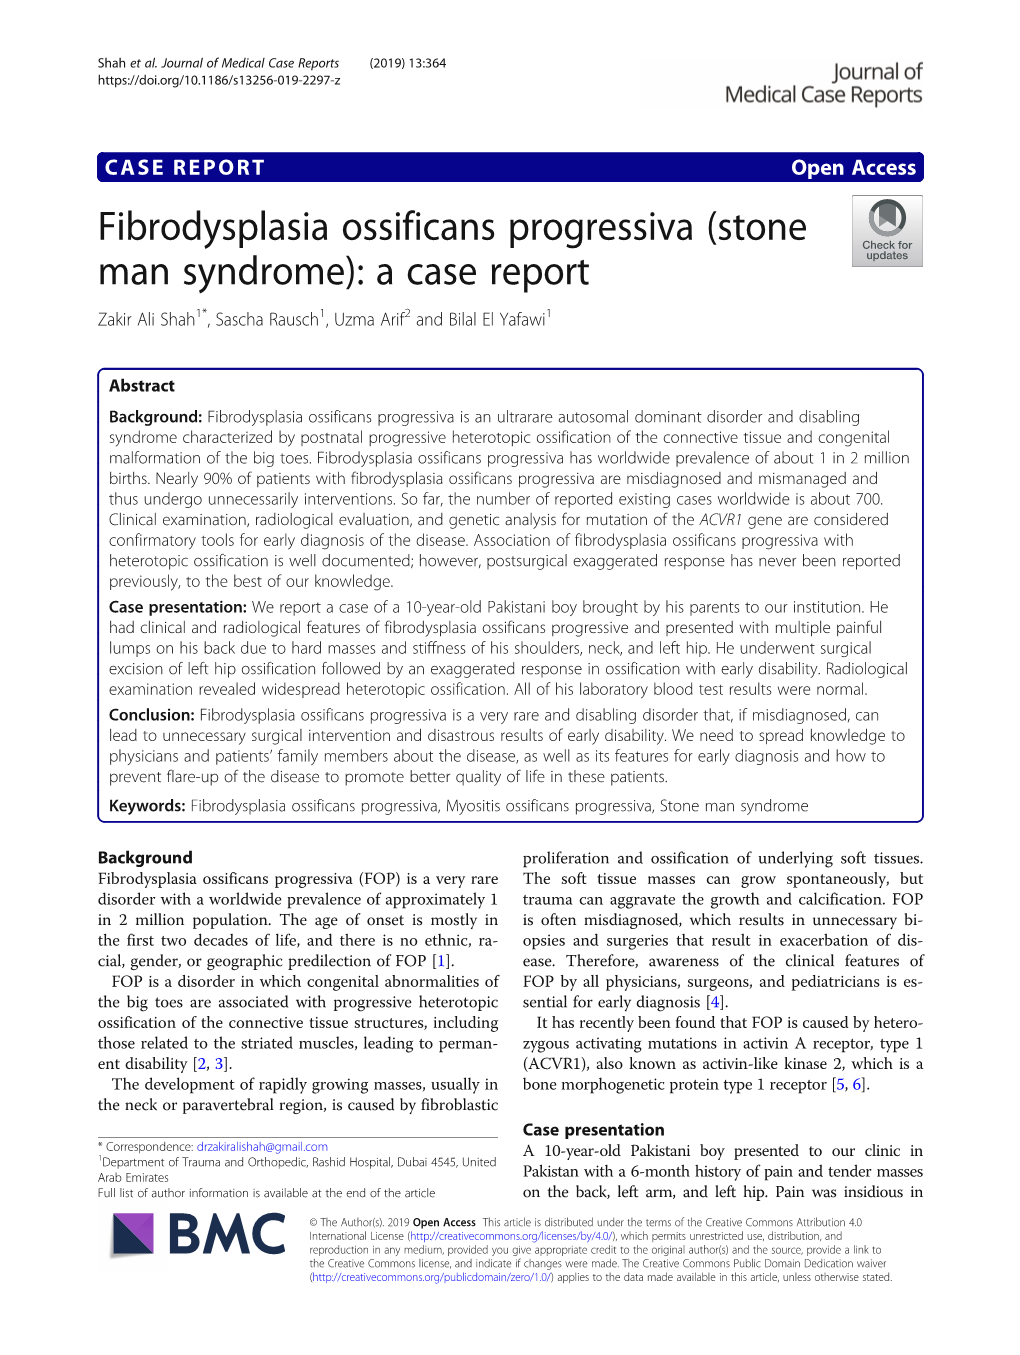 Fibrodysplasia Ossificans Progressiva (Stone Man Syndrome): a Case Report Zakir Ali Shah1*, Sascha Rausch1, Uzma Arif2 and Bilal El Yafawi1